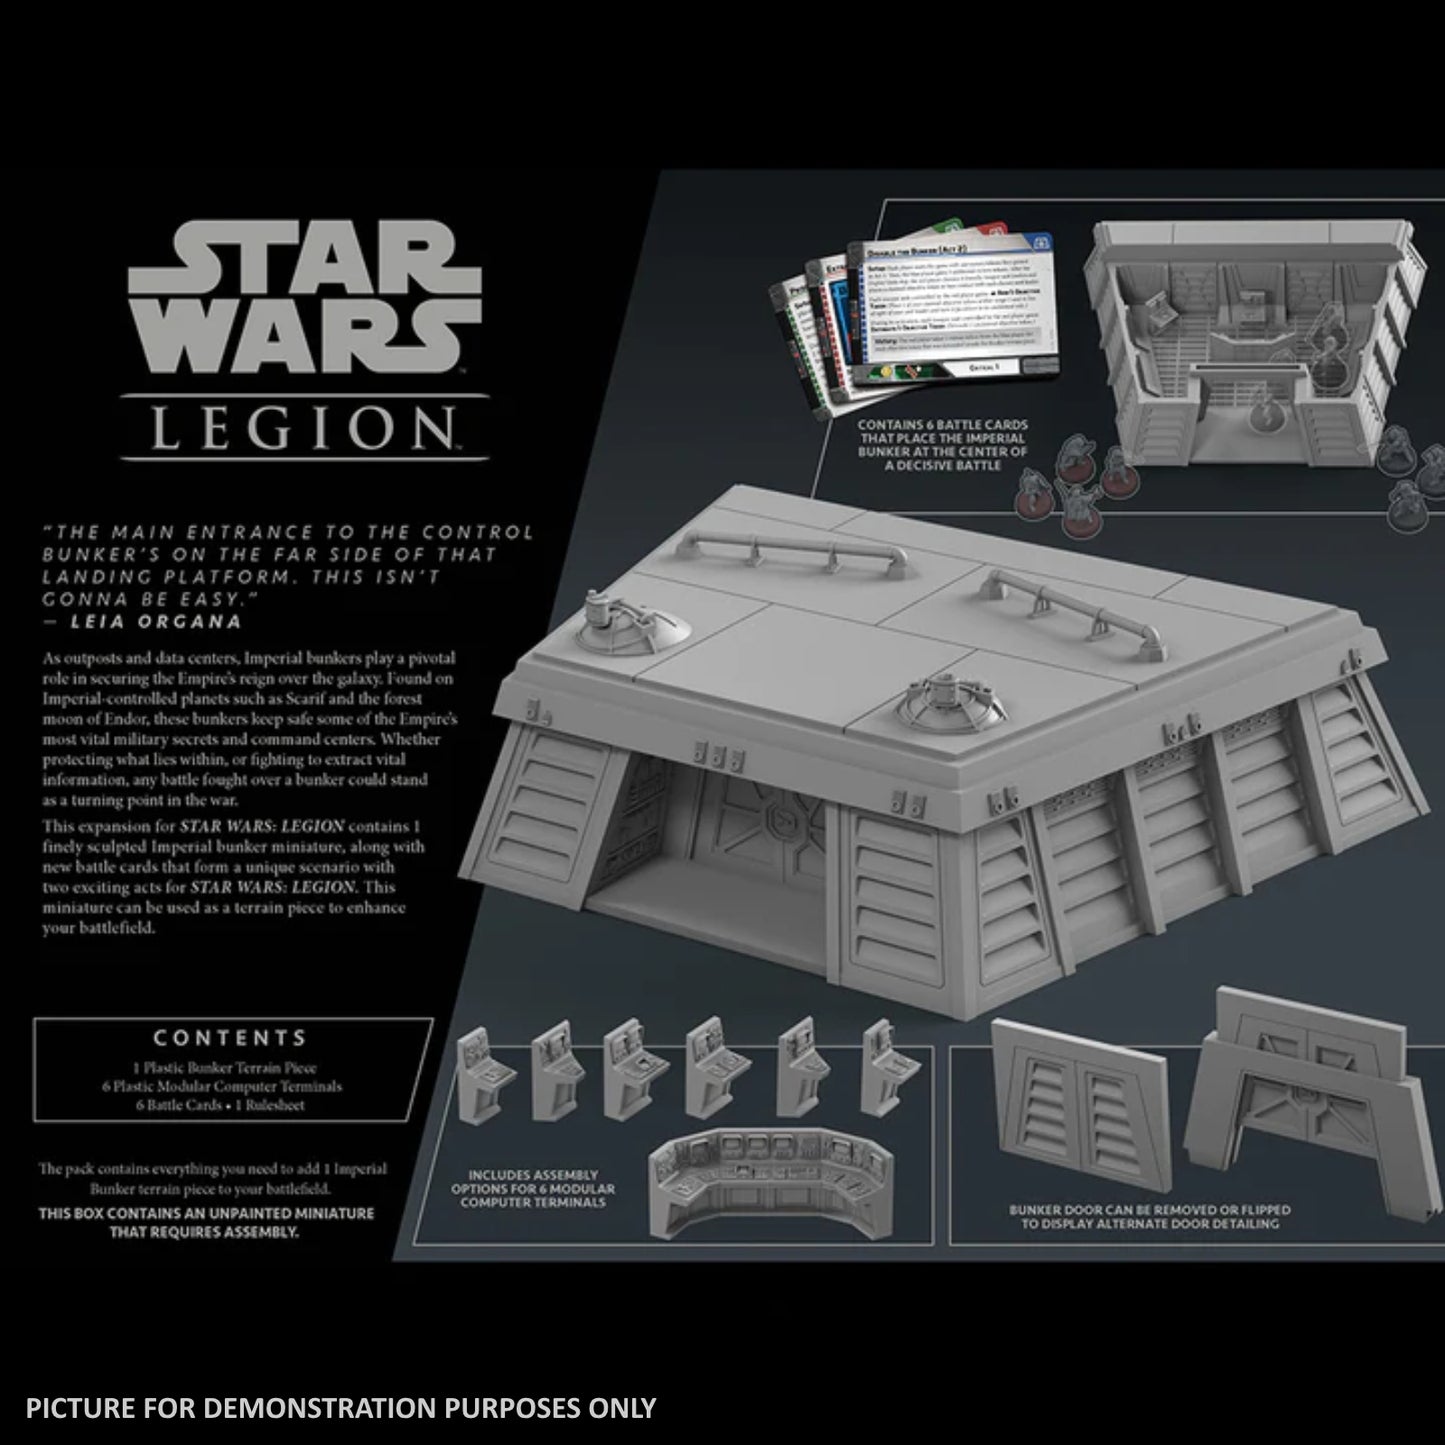 Star Wars Legion - Imperial Bunker Battlefield Expansion